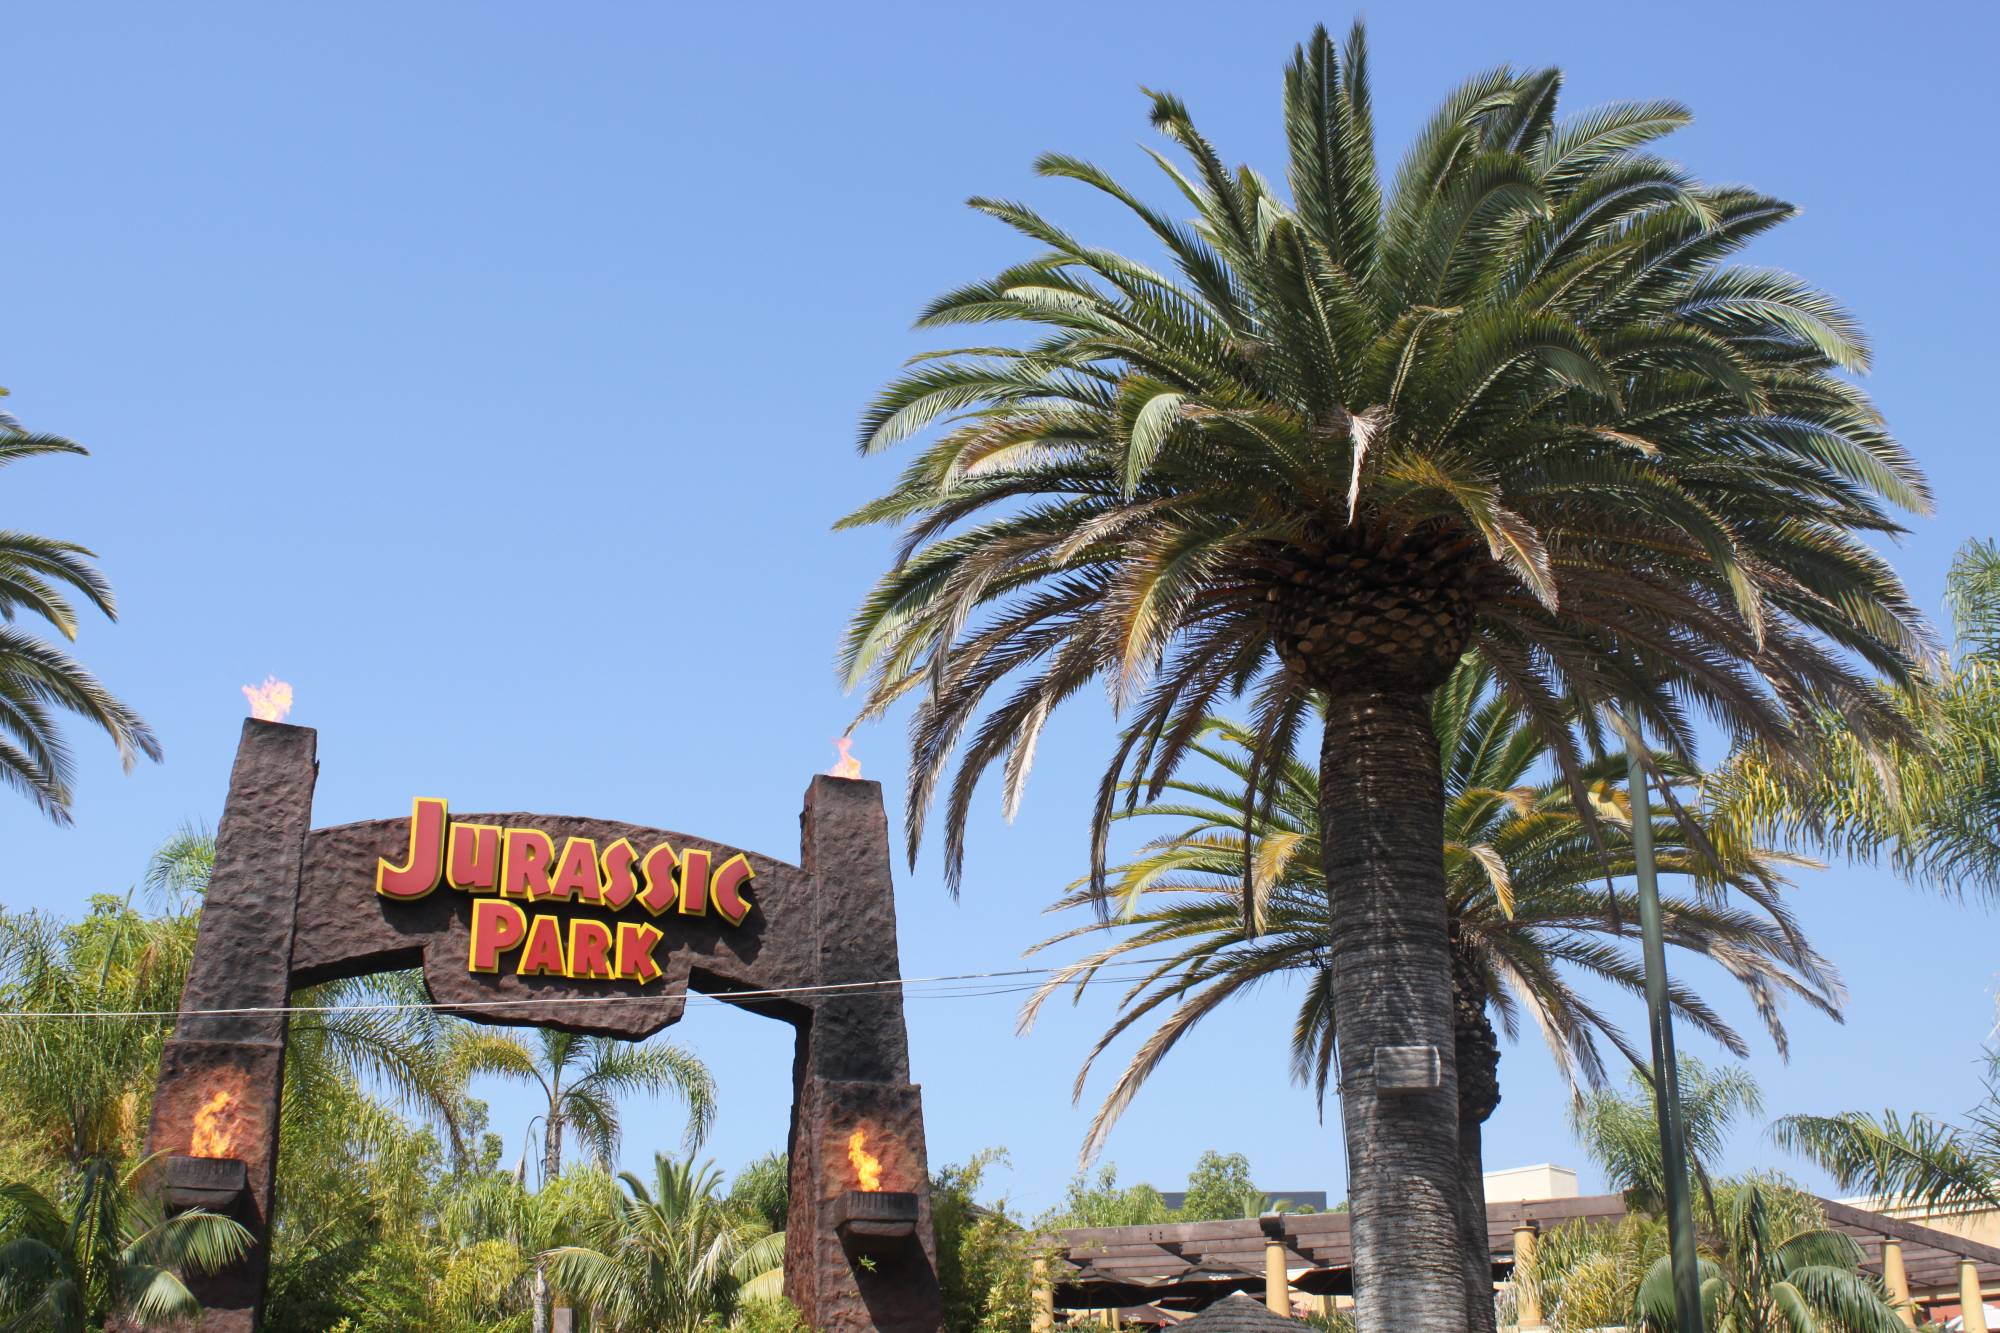 Universal Studios Hollywood - Lower Lot - Jurassic Park